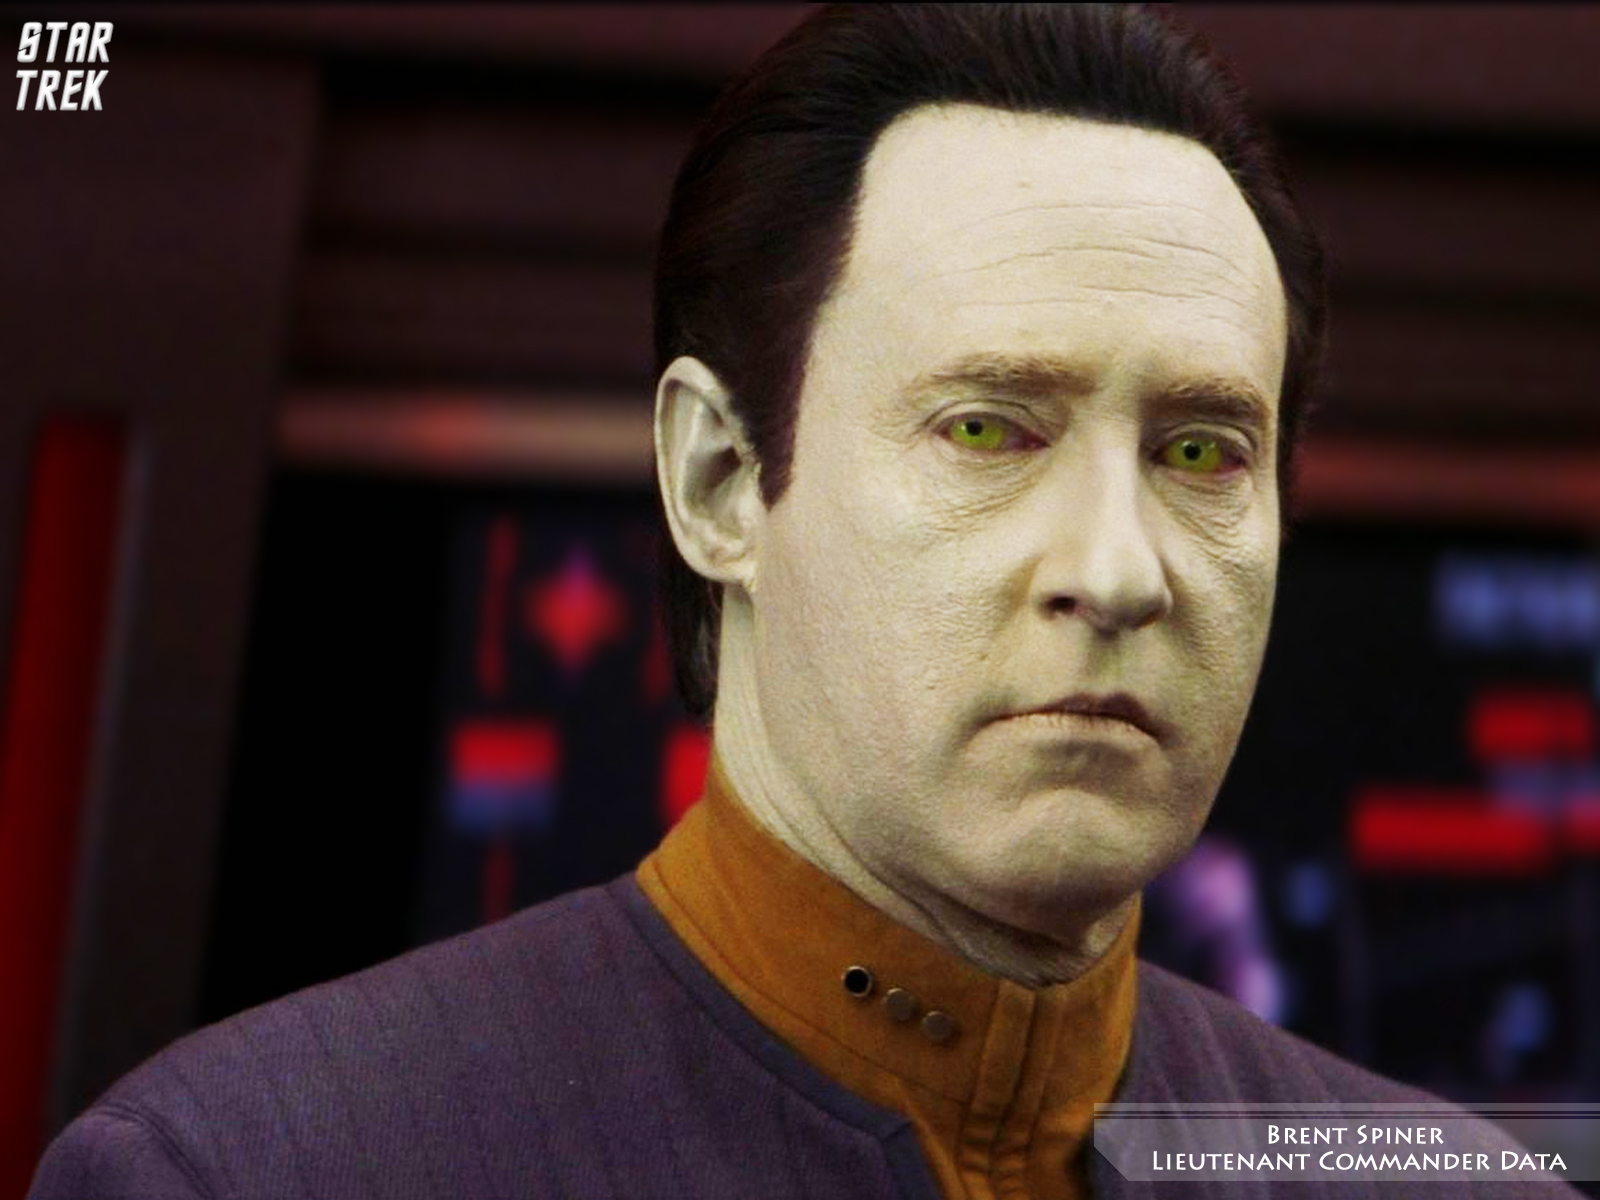 - Star Trek Lieutenant Commander Data - free Star Trek computer desktop wallpaper, pictures, images.